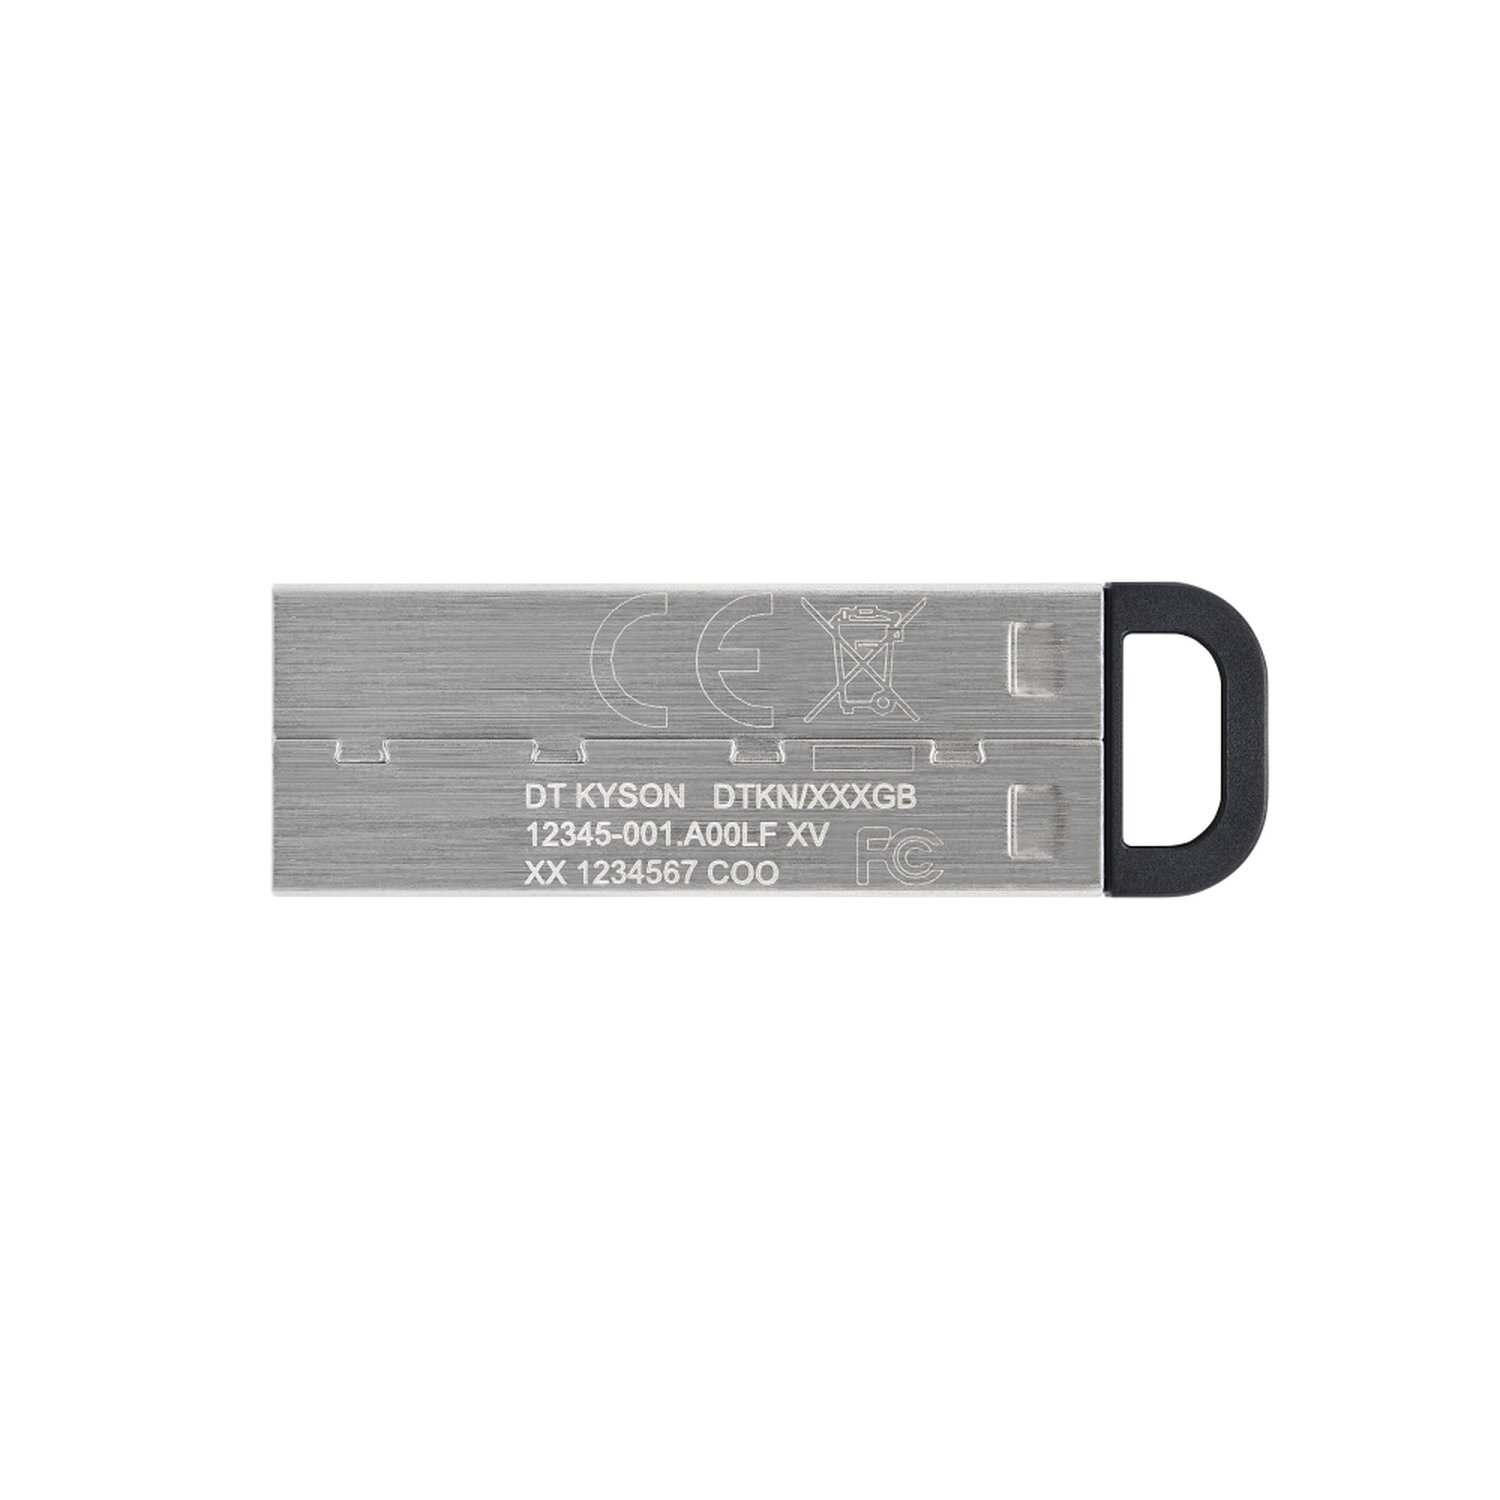 KINGSTON Pendrive GB GB) DT USB 128 (Schwarz, Stick 128